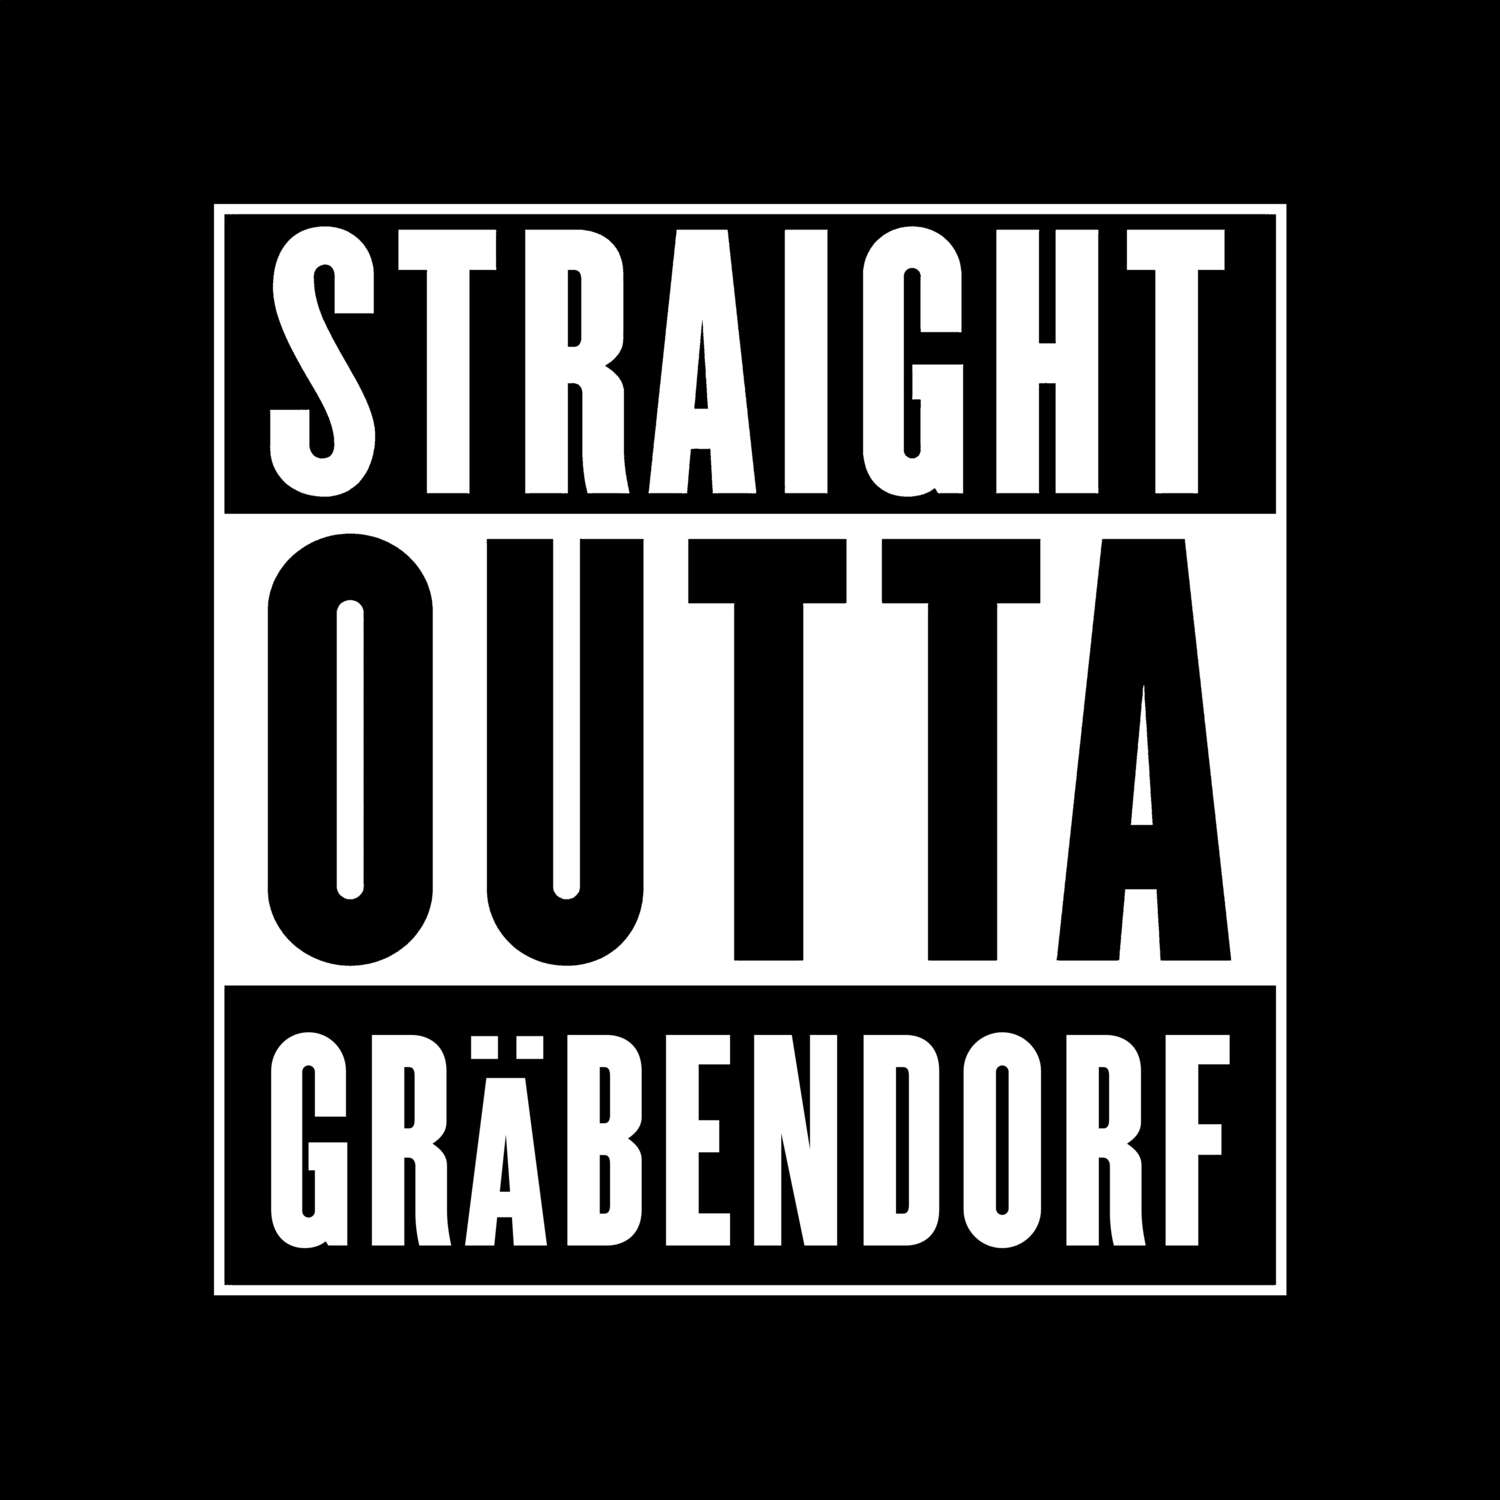 Gräbendorf T-Shirt »Straight Outta«